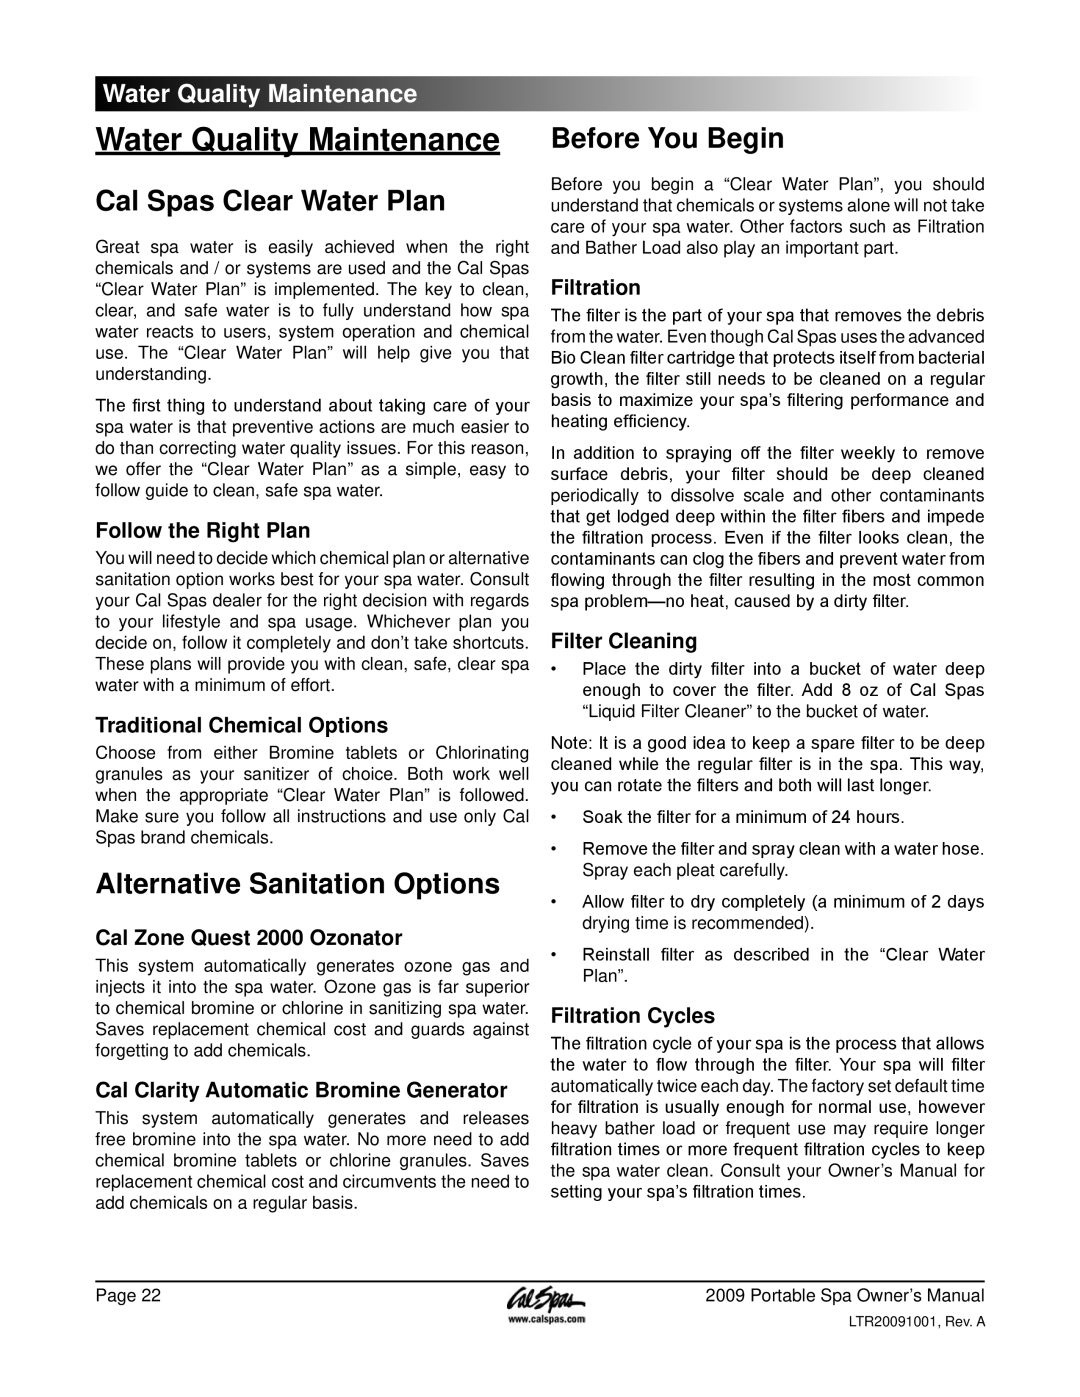 Cal Spas Portable Spas Water Quality Maintenance, Cal Spas Clear Water Plan, Alternative Sanitation Options, Filtration 